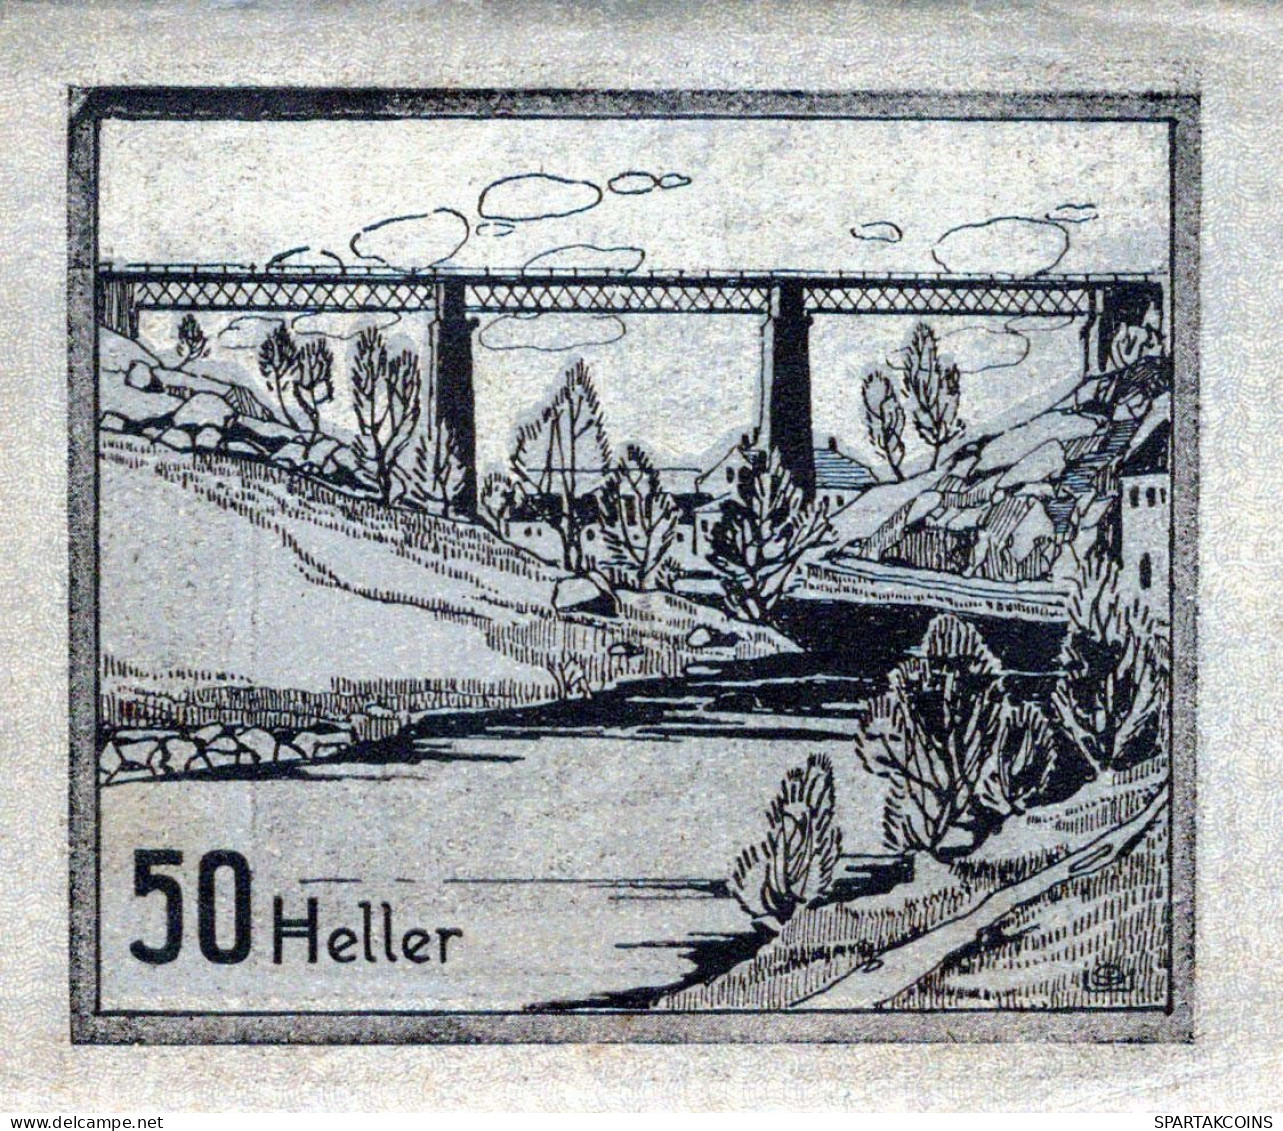 50 HELLER 1920 Stadt Prägraten In Tirol Österreich Notgeld Banknote #PE456 - [11] Local Banknote Issues